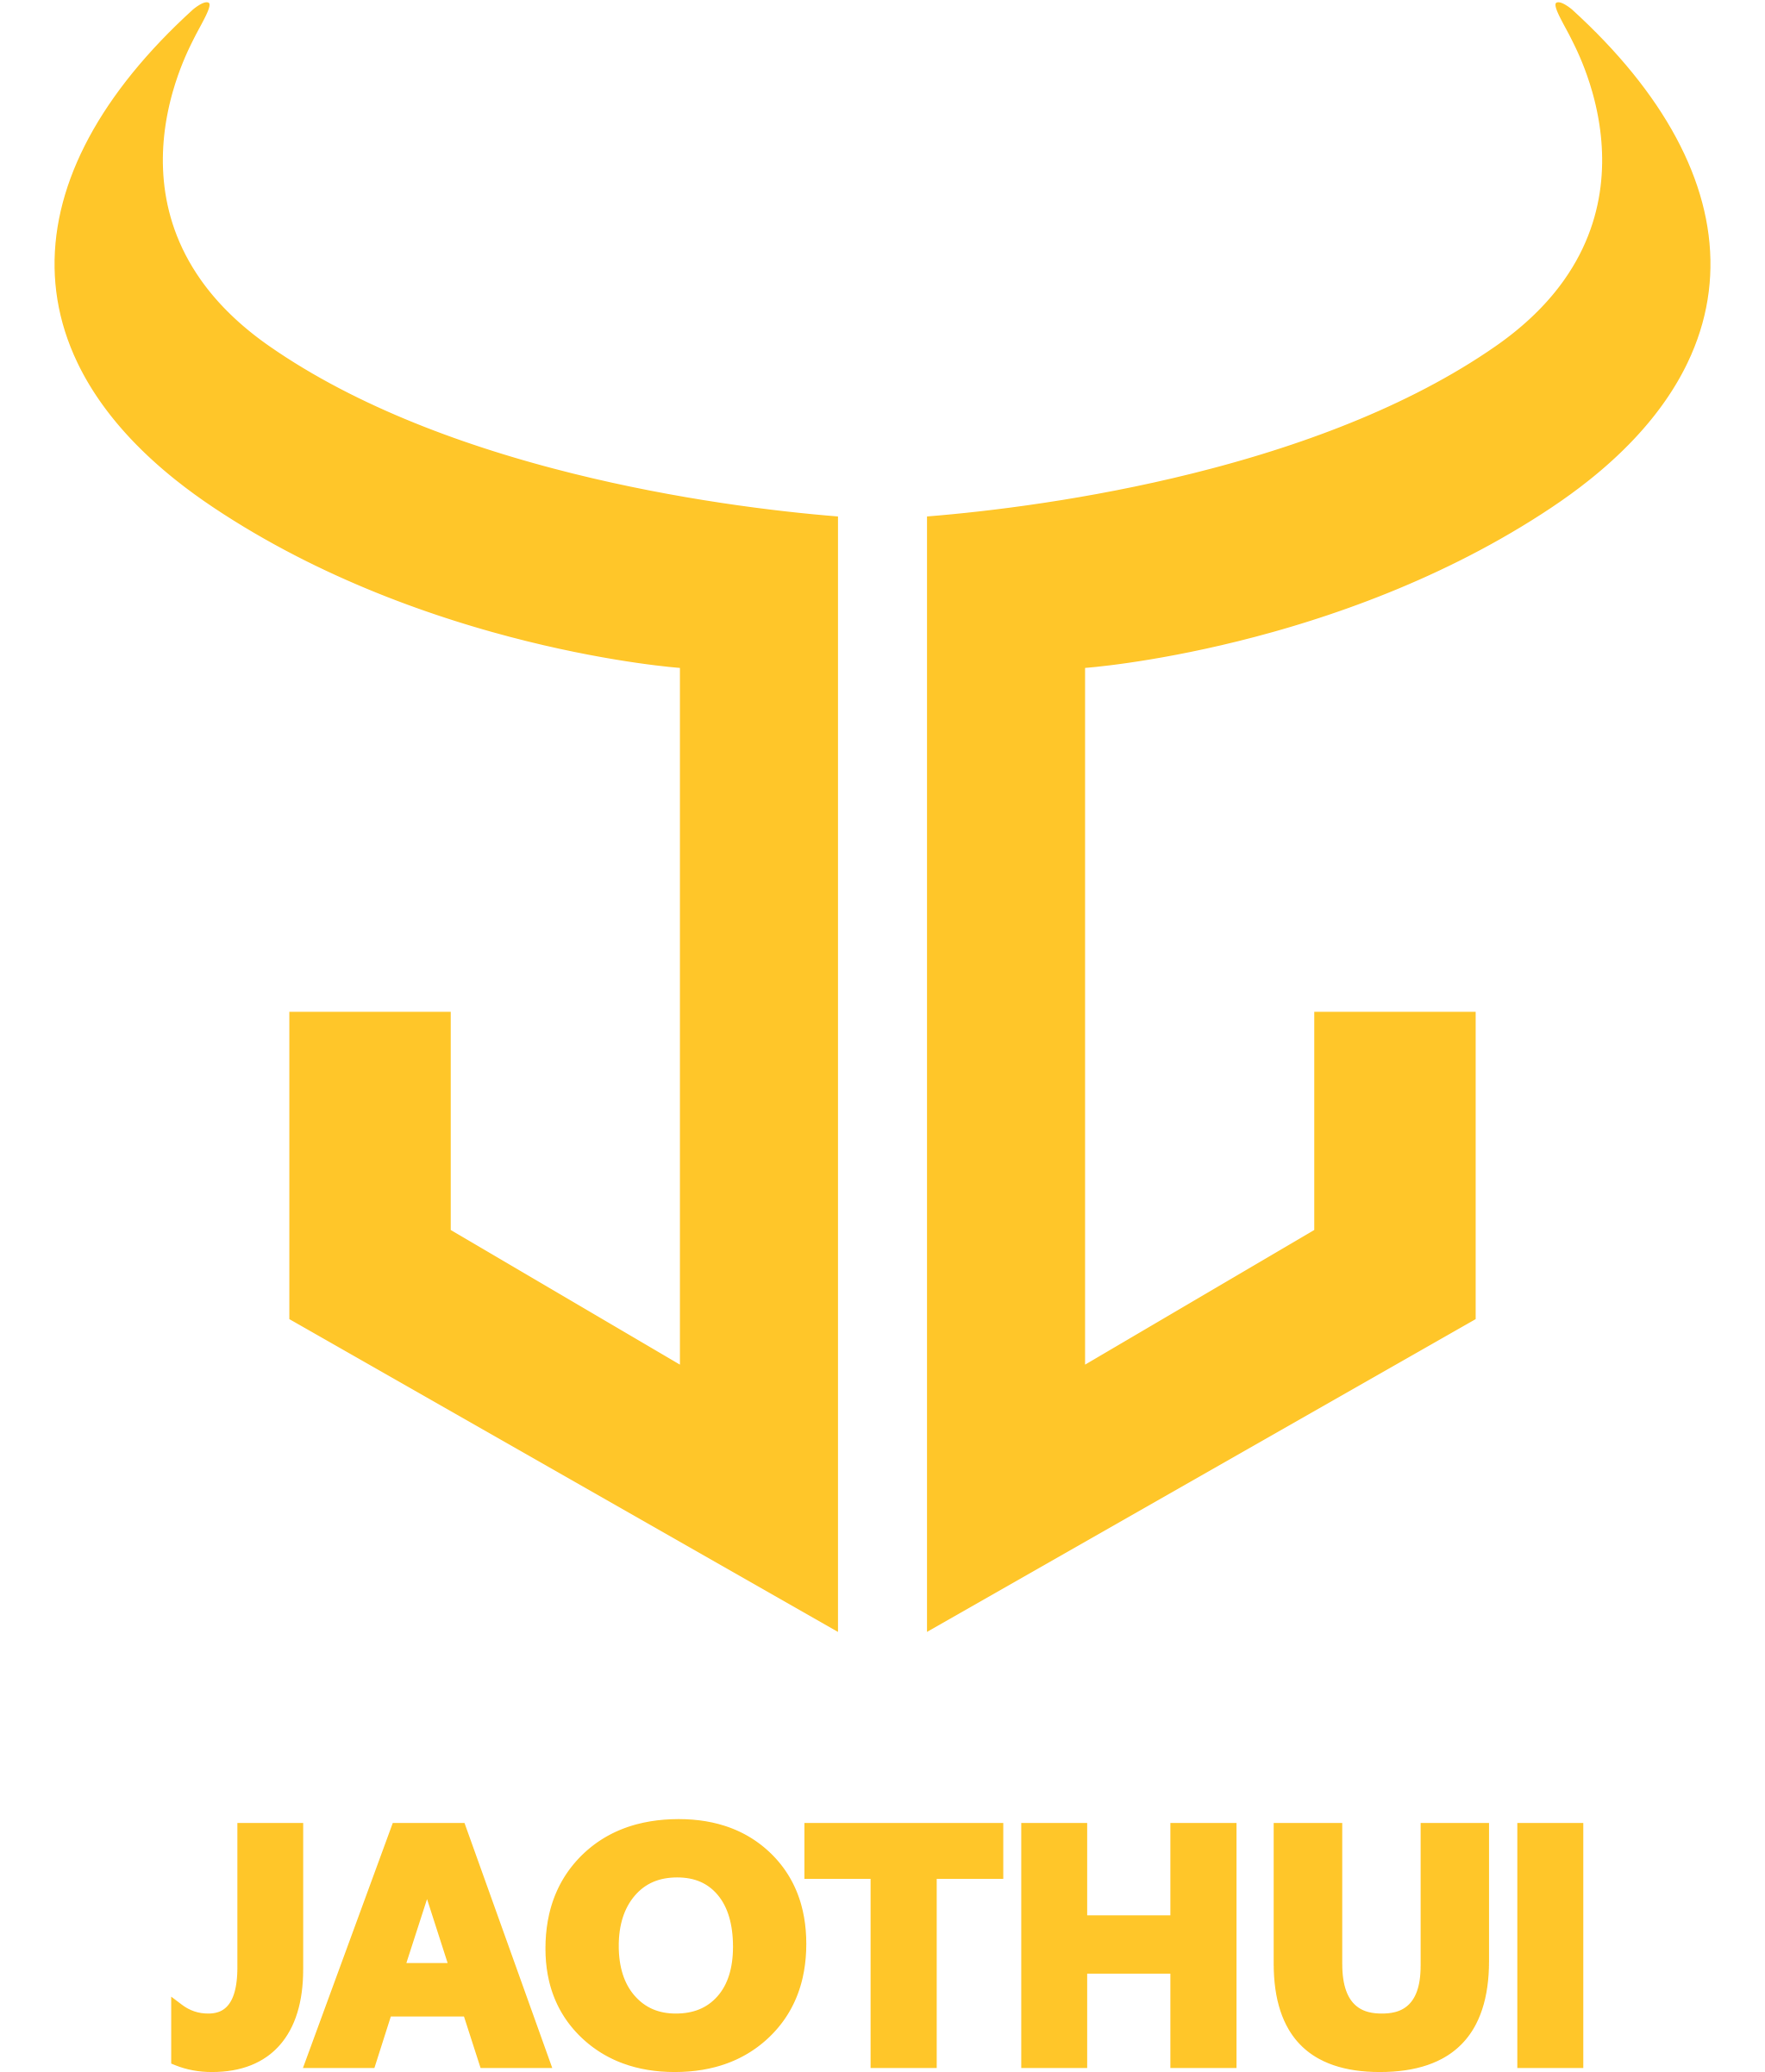 Jaothui